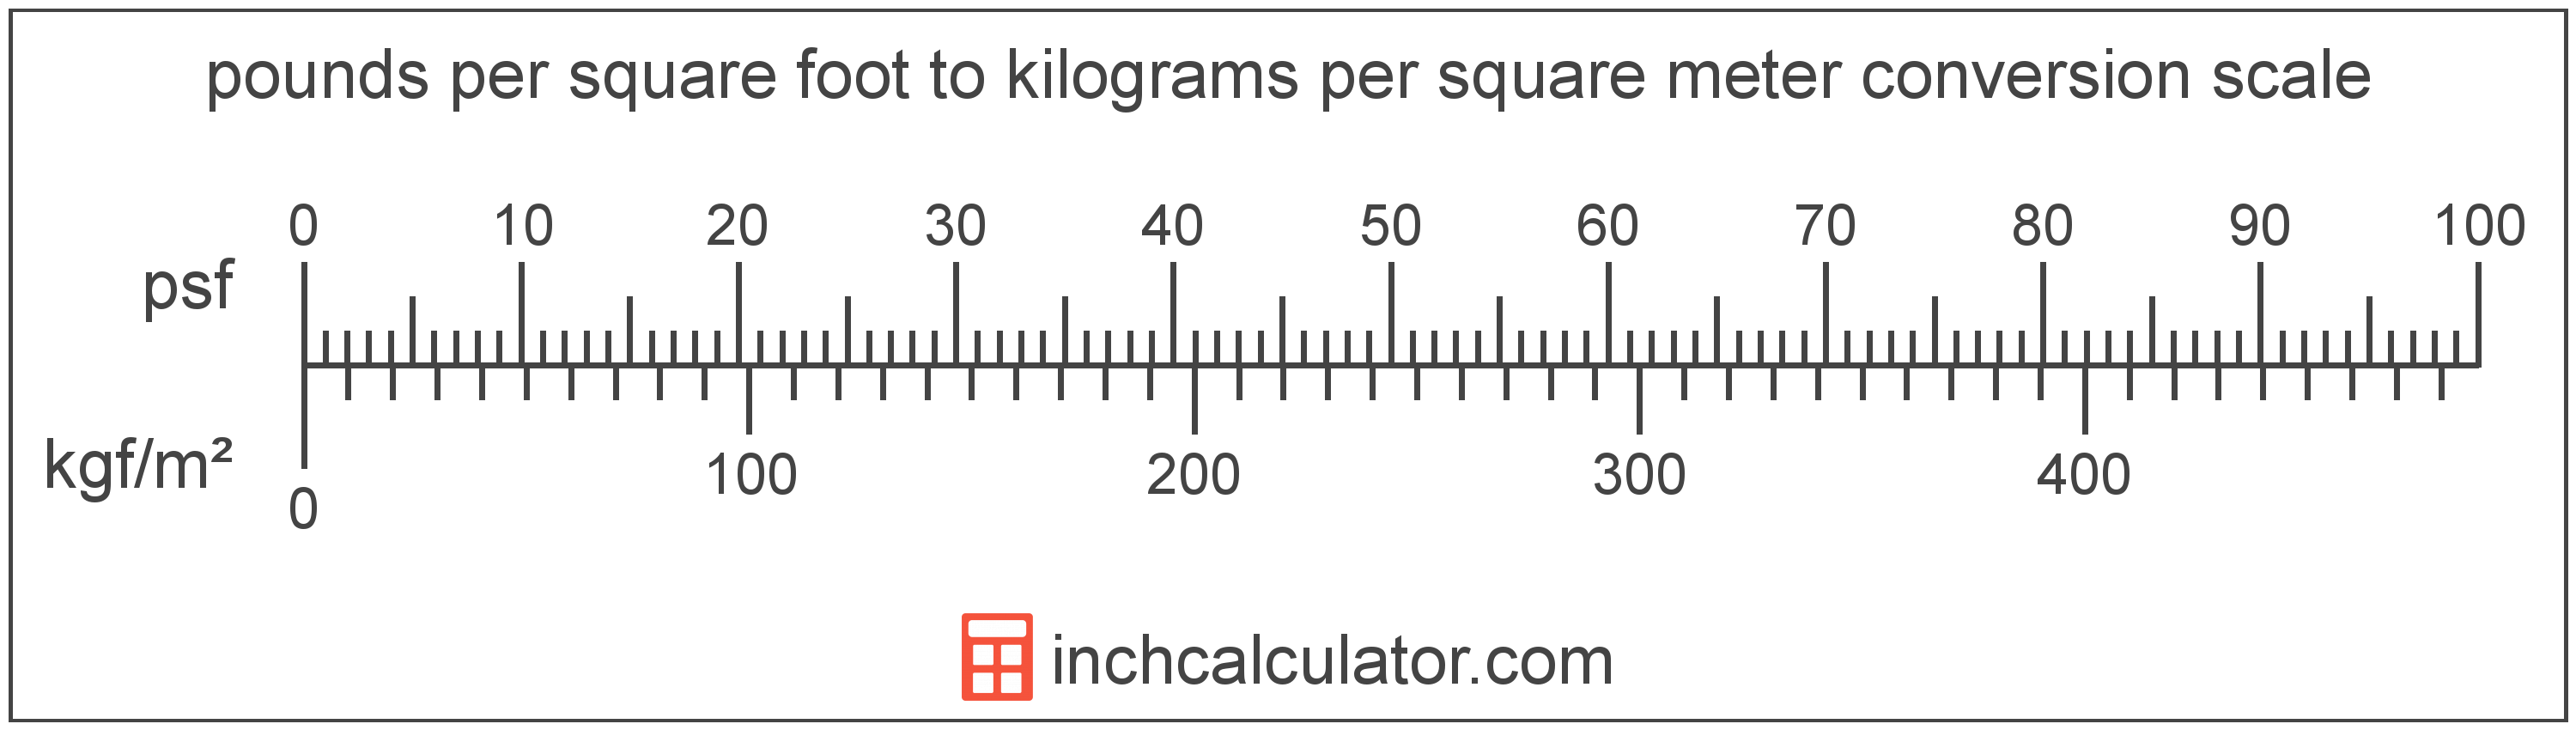 conversion scale showing kilograms per square meter and equivalent pounds per square foot pressure values